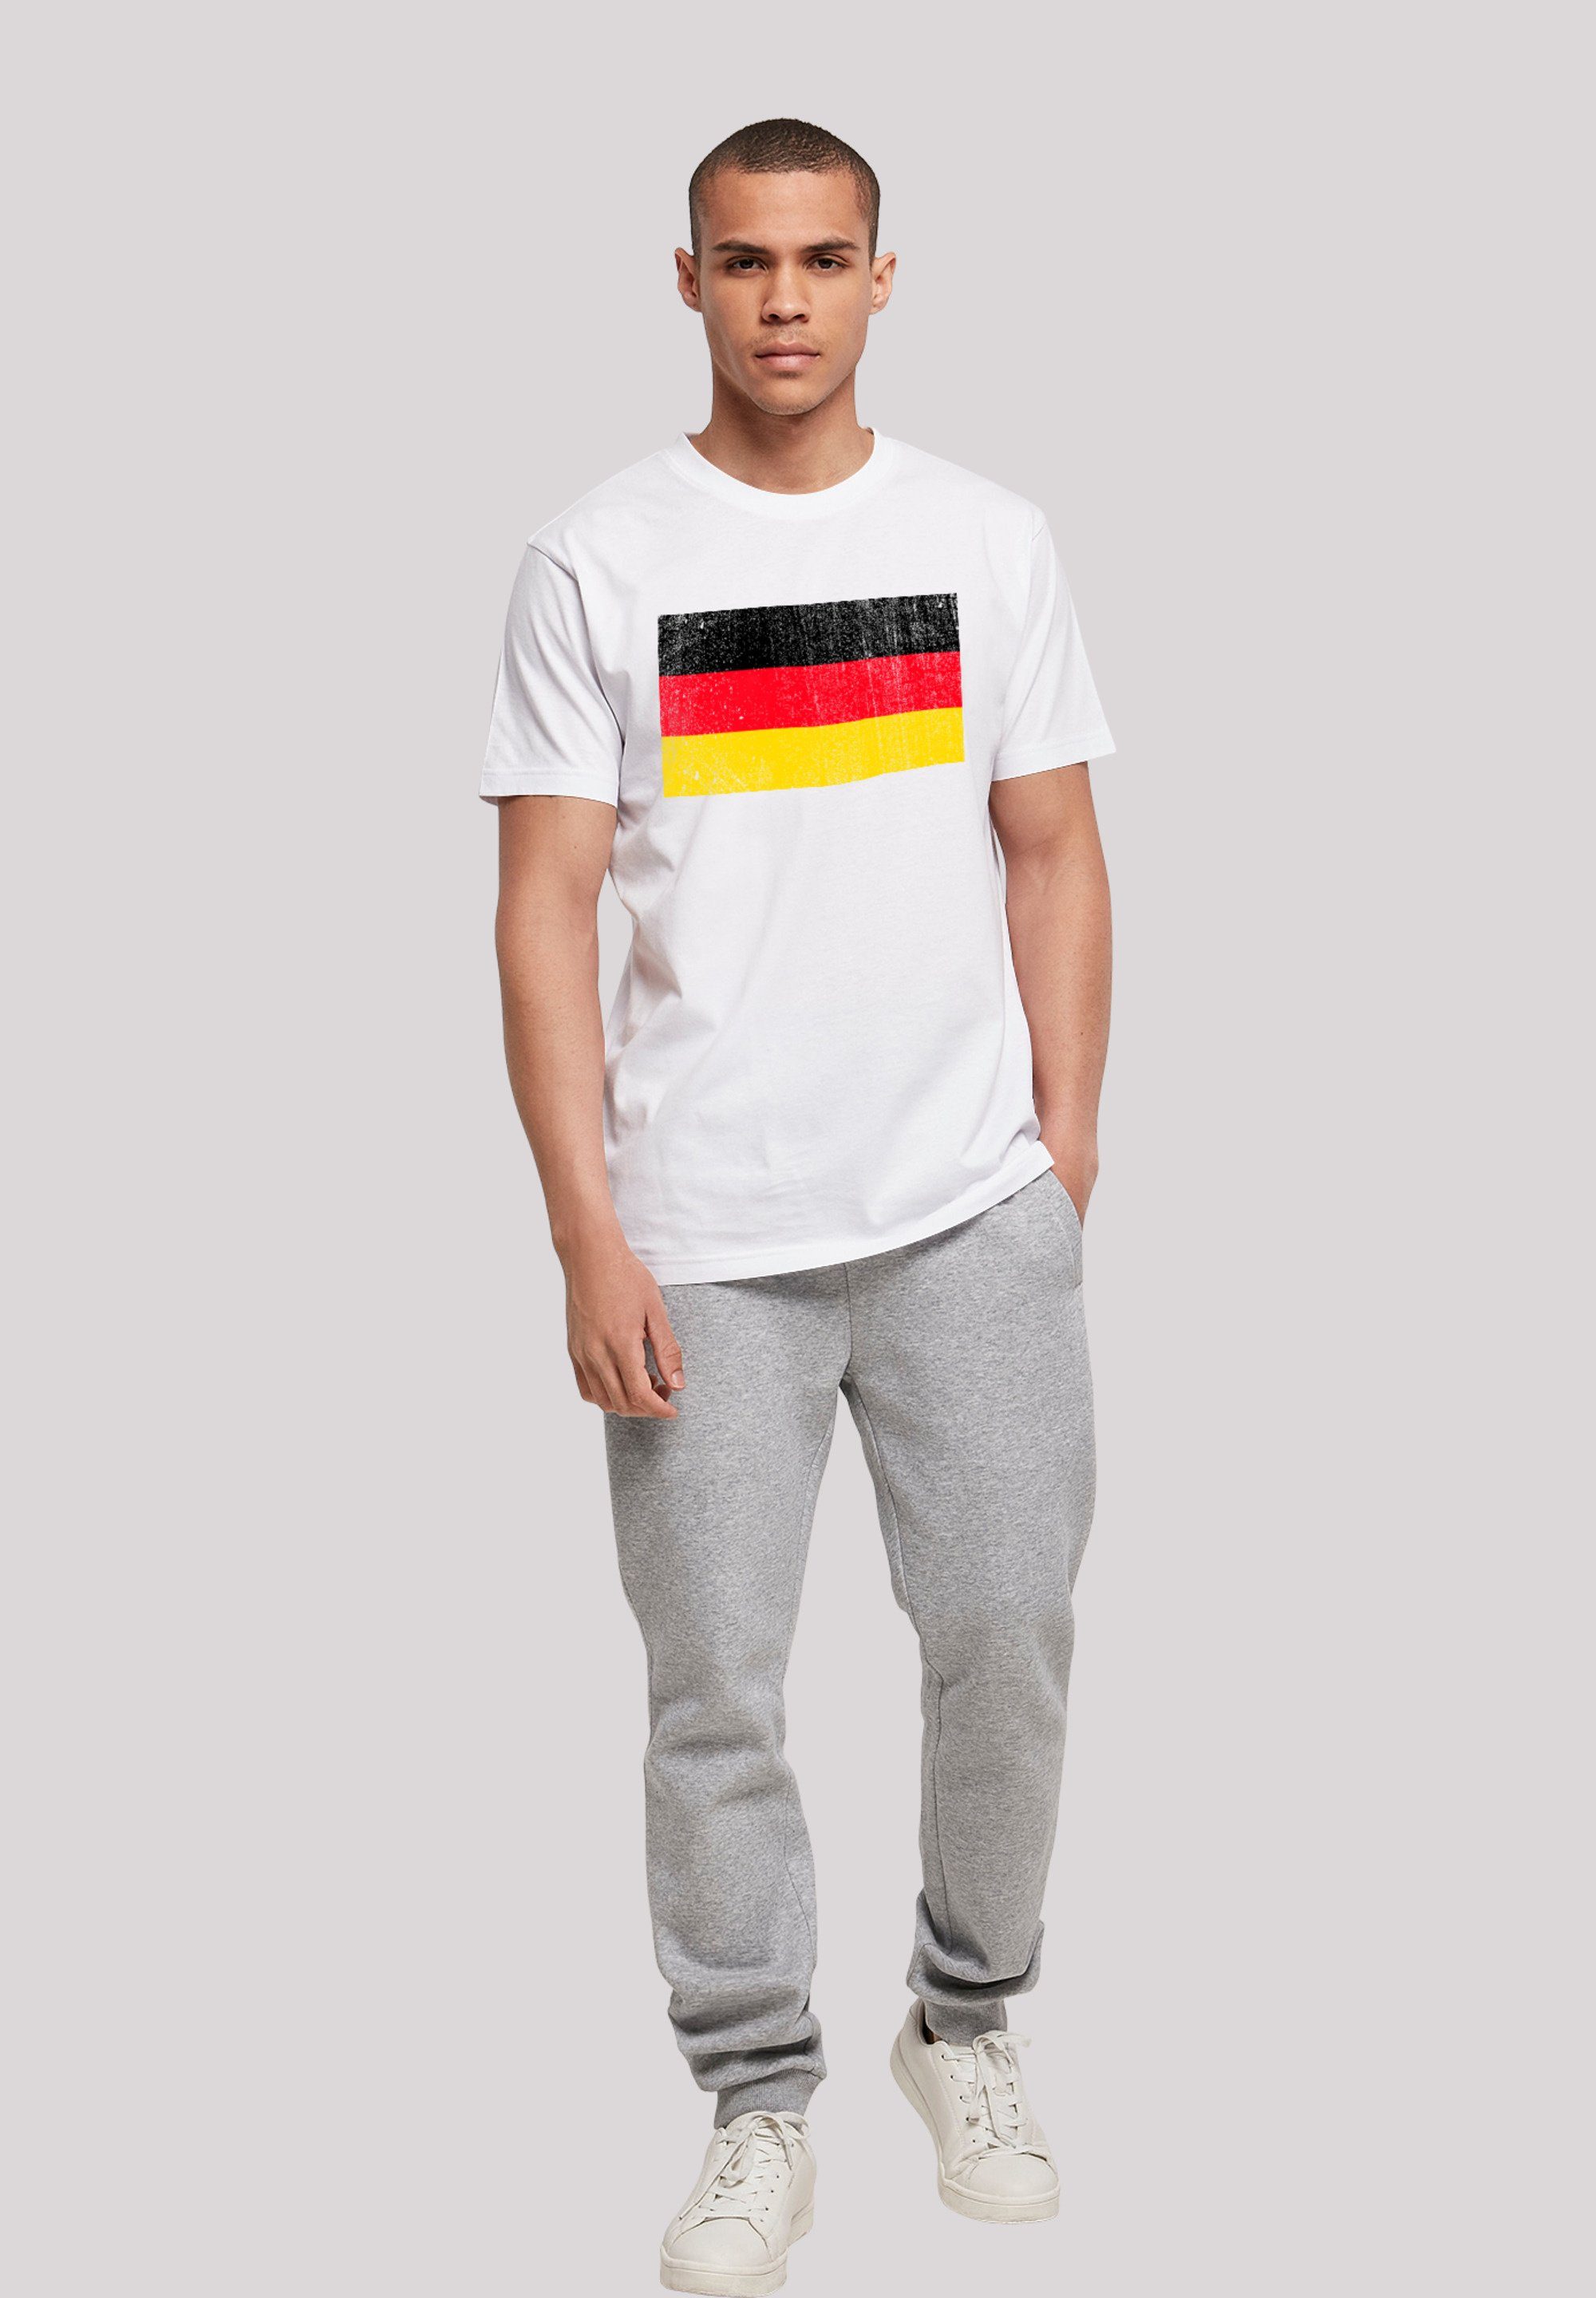 T-Shirt Print F4NT4STIC distressed Deutschland Germany weiß Flagge